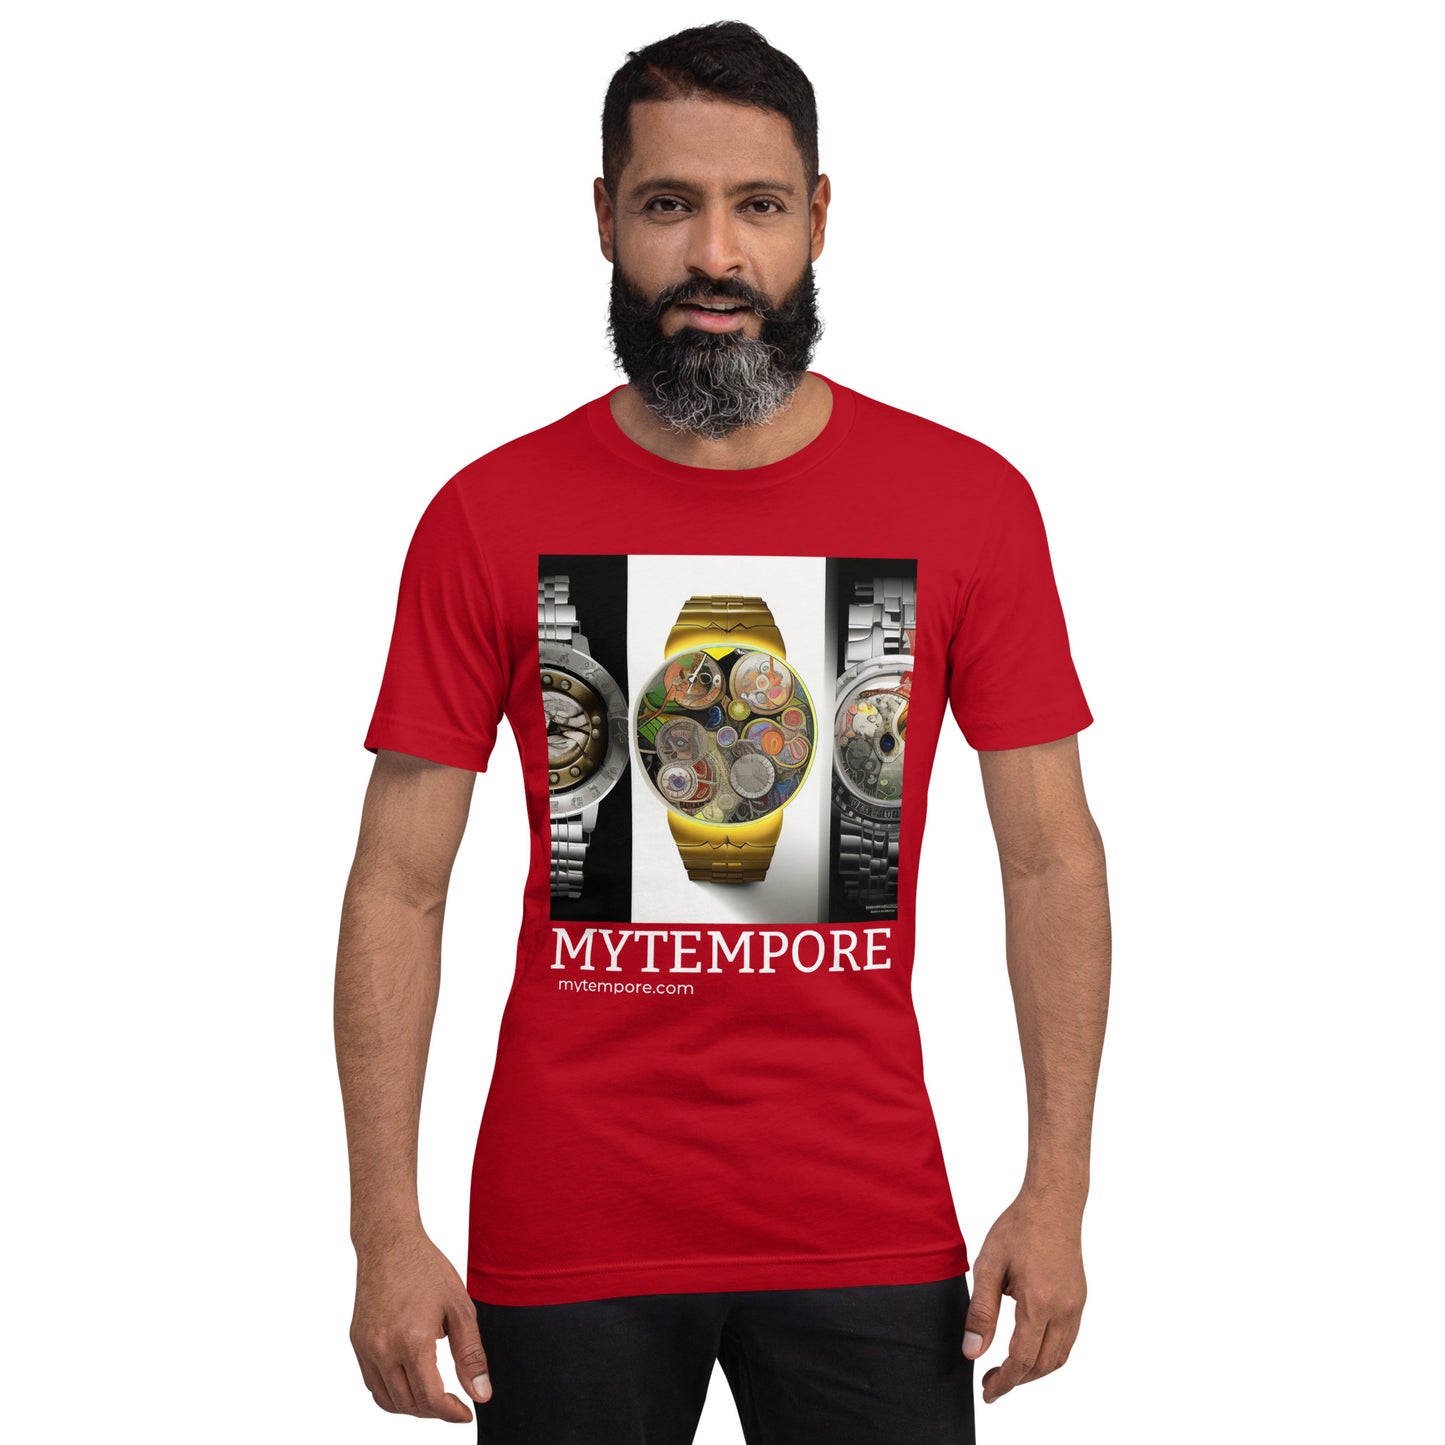 "MYTEMPORE" PRESTIGE WATCHES Unisex t-shirt